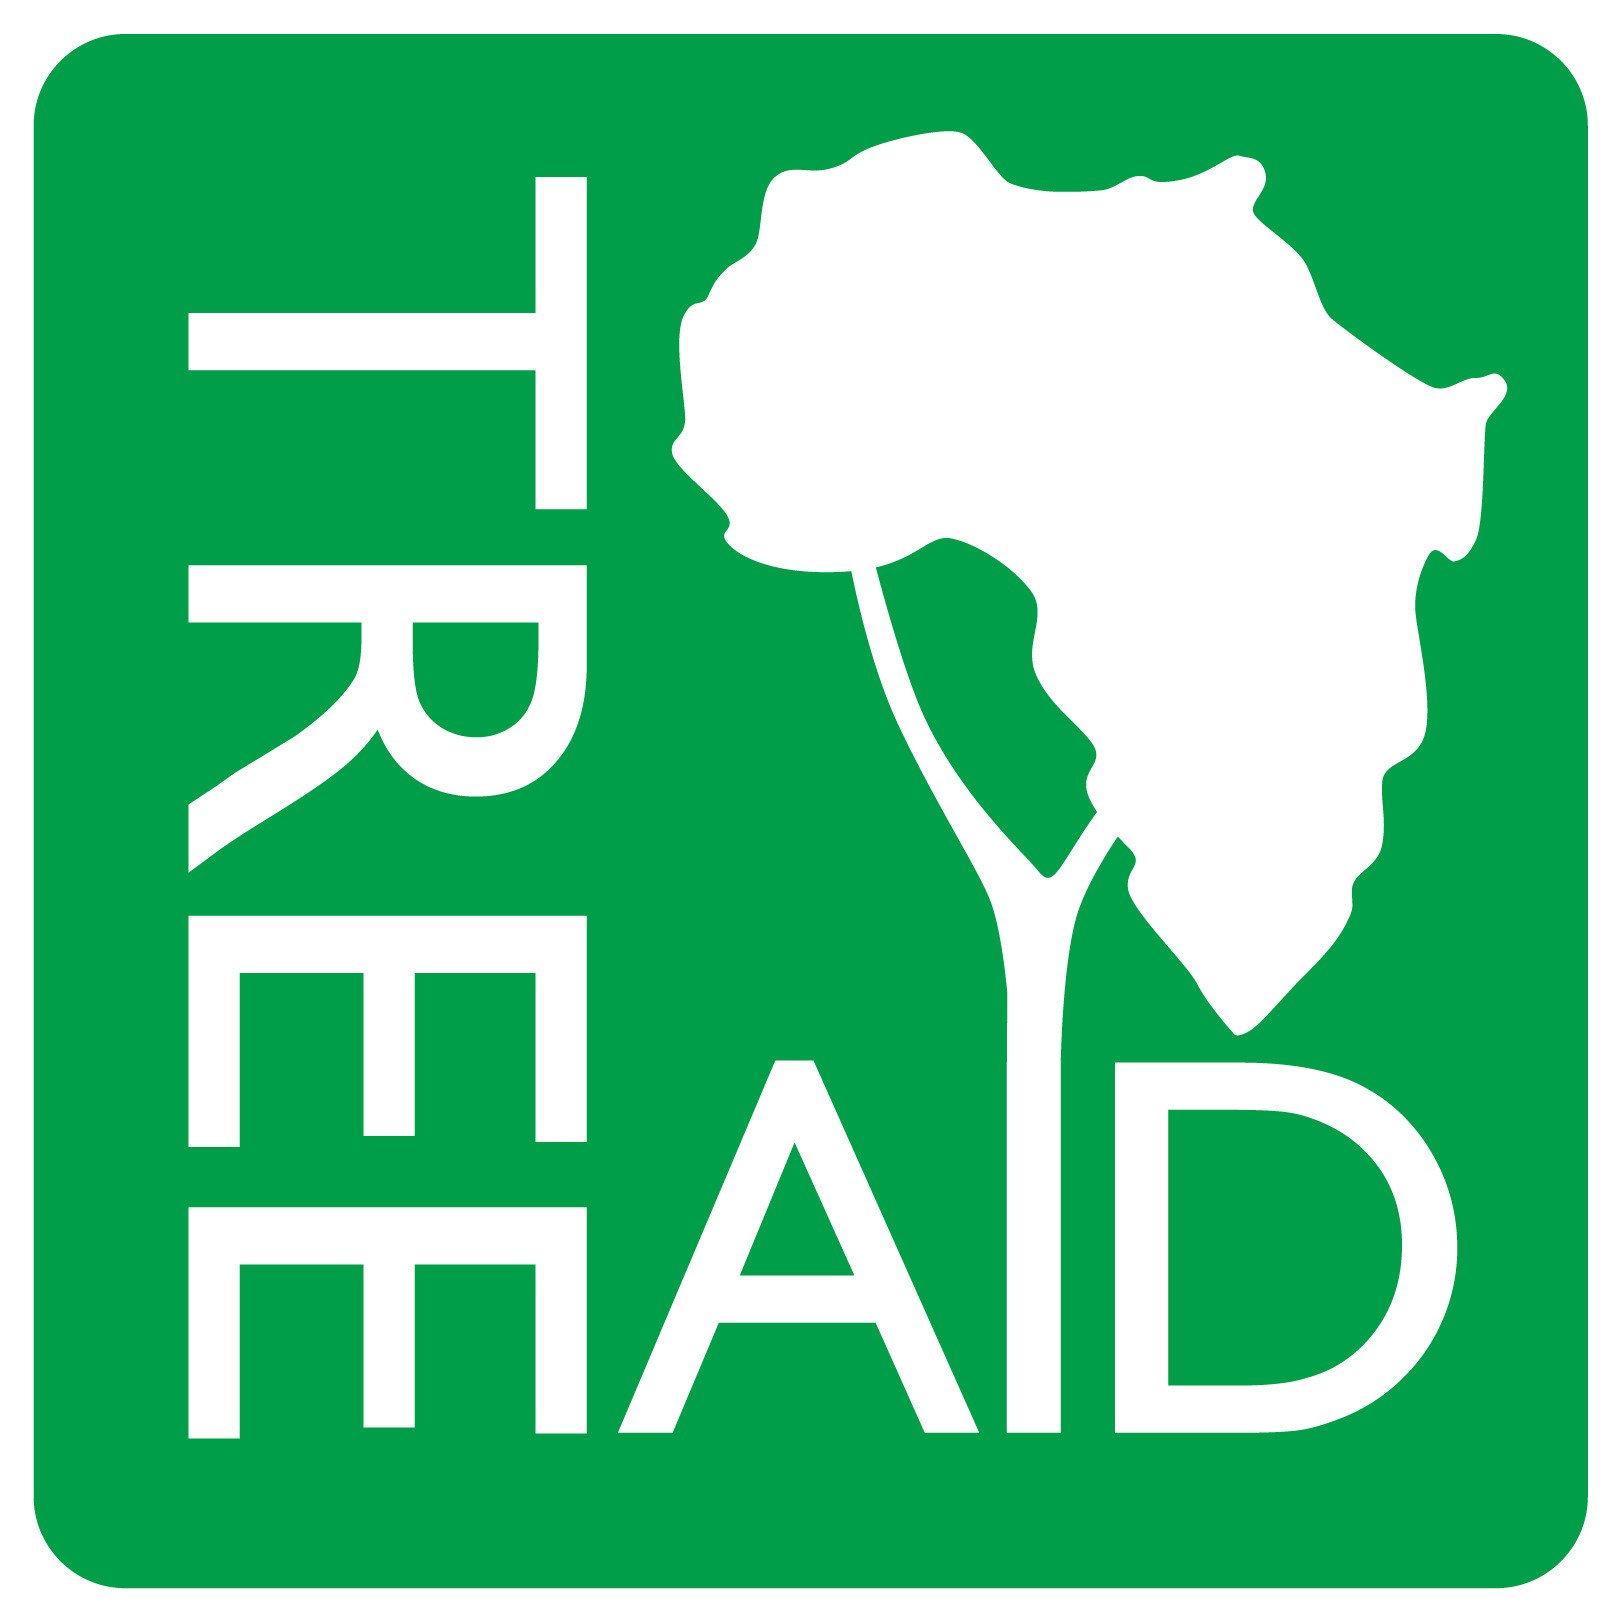 RS49_Tree Aid logo - JPG © 2021 Tree Aid. All rights reserved (1) (1).jpg